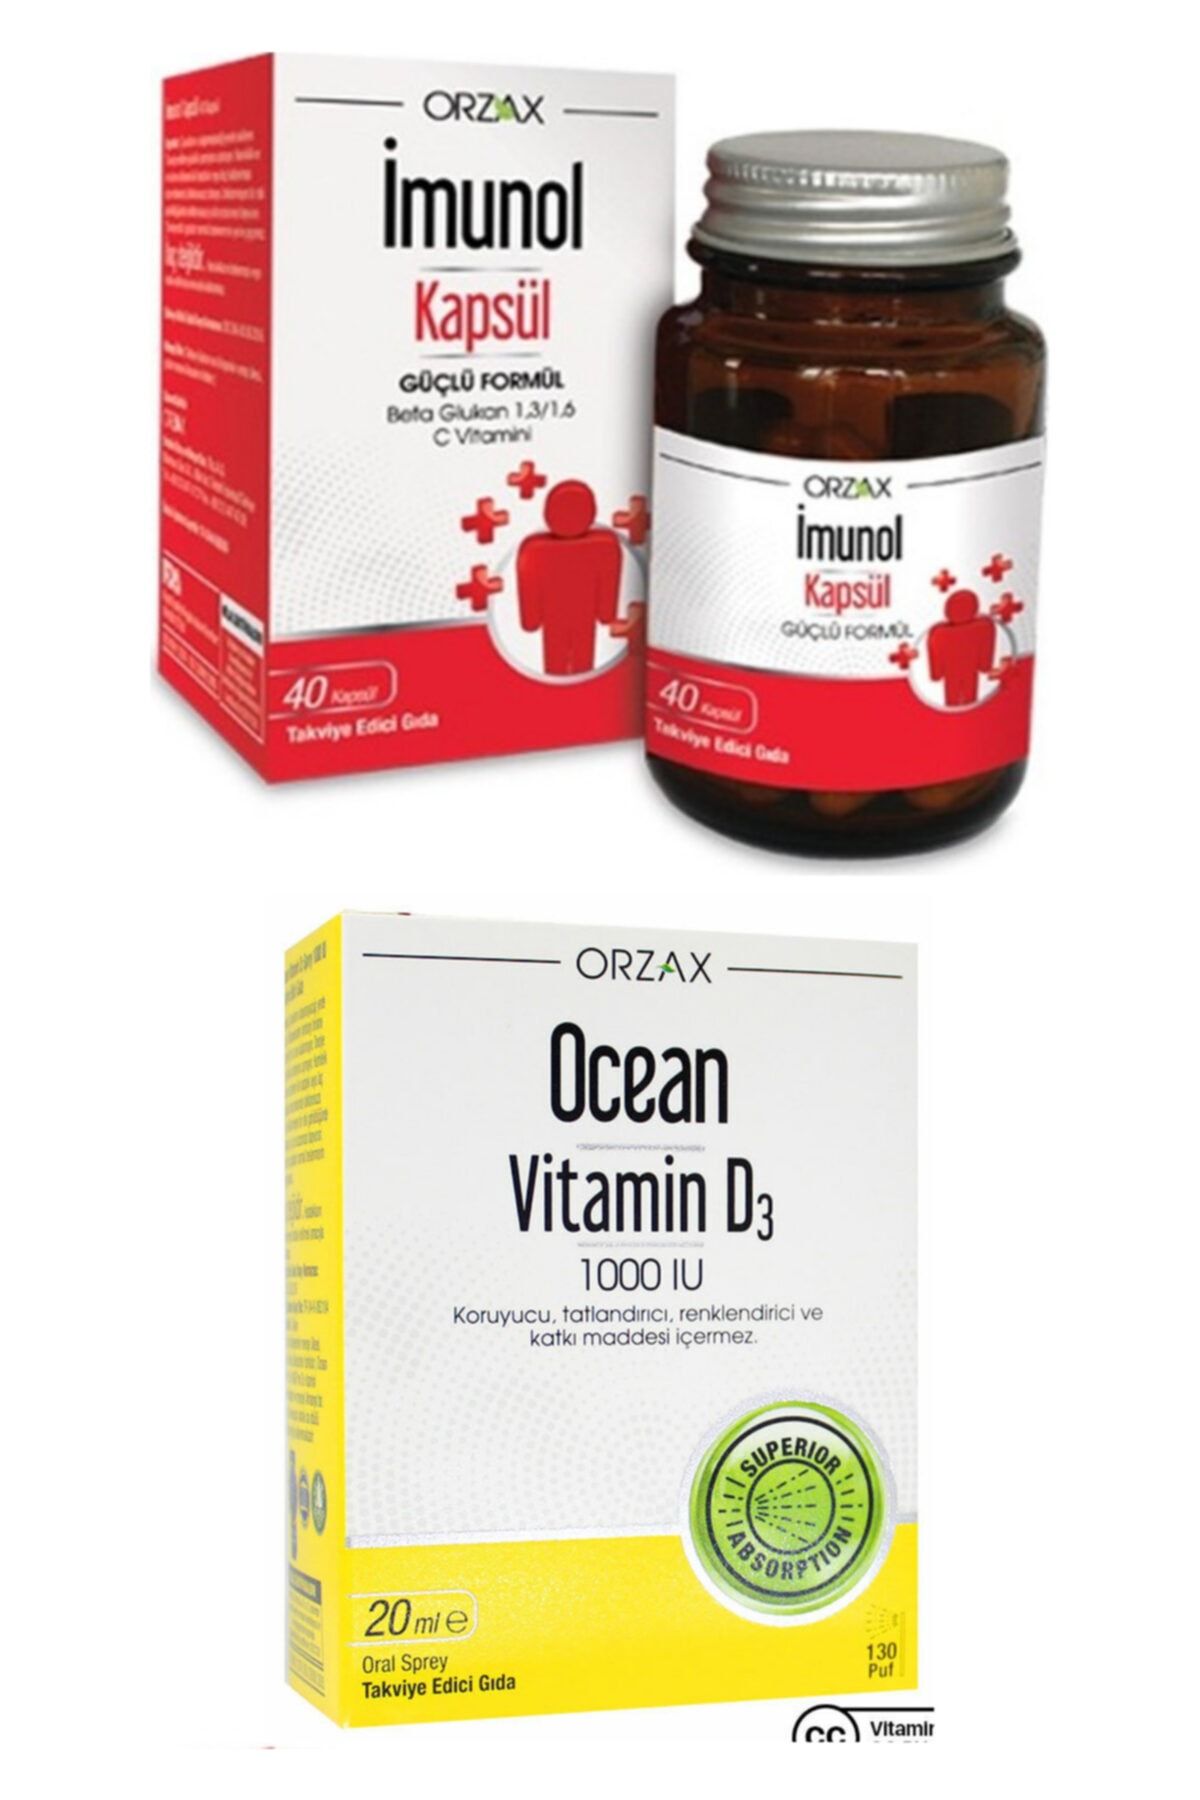 İMUNOL Imunol 40 Kapsül Ve Ocean Vitamin D3 1000ıu Sprey 20ml